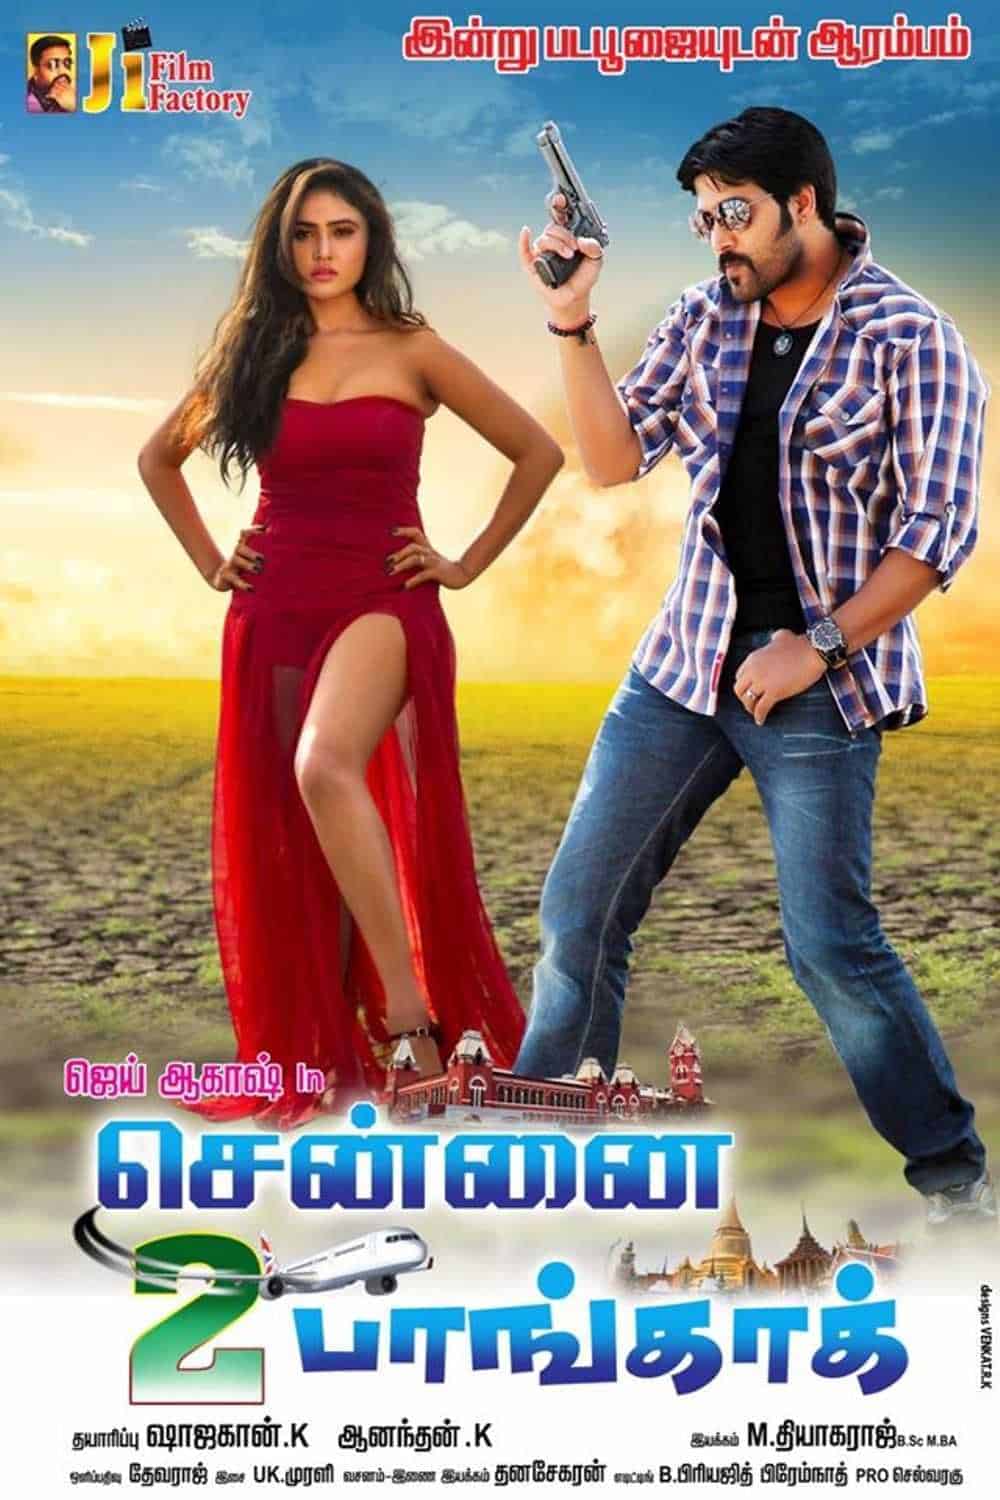 Chennai 2 Bangkok 2019 Tamil Action Movie Online